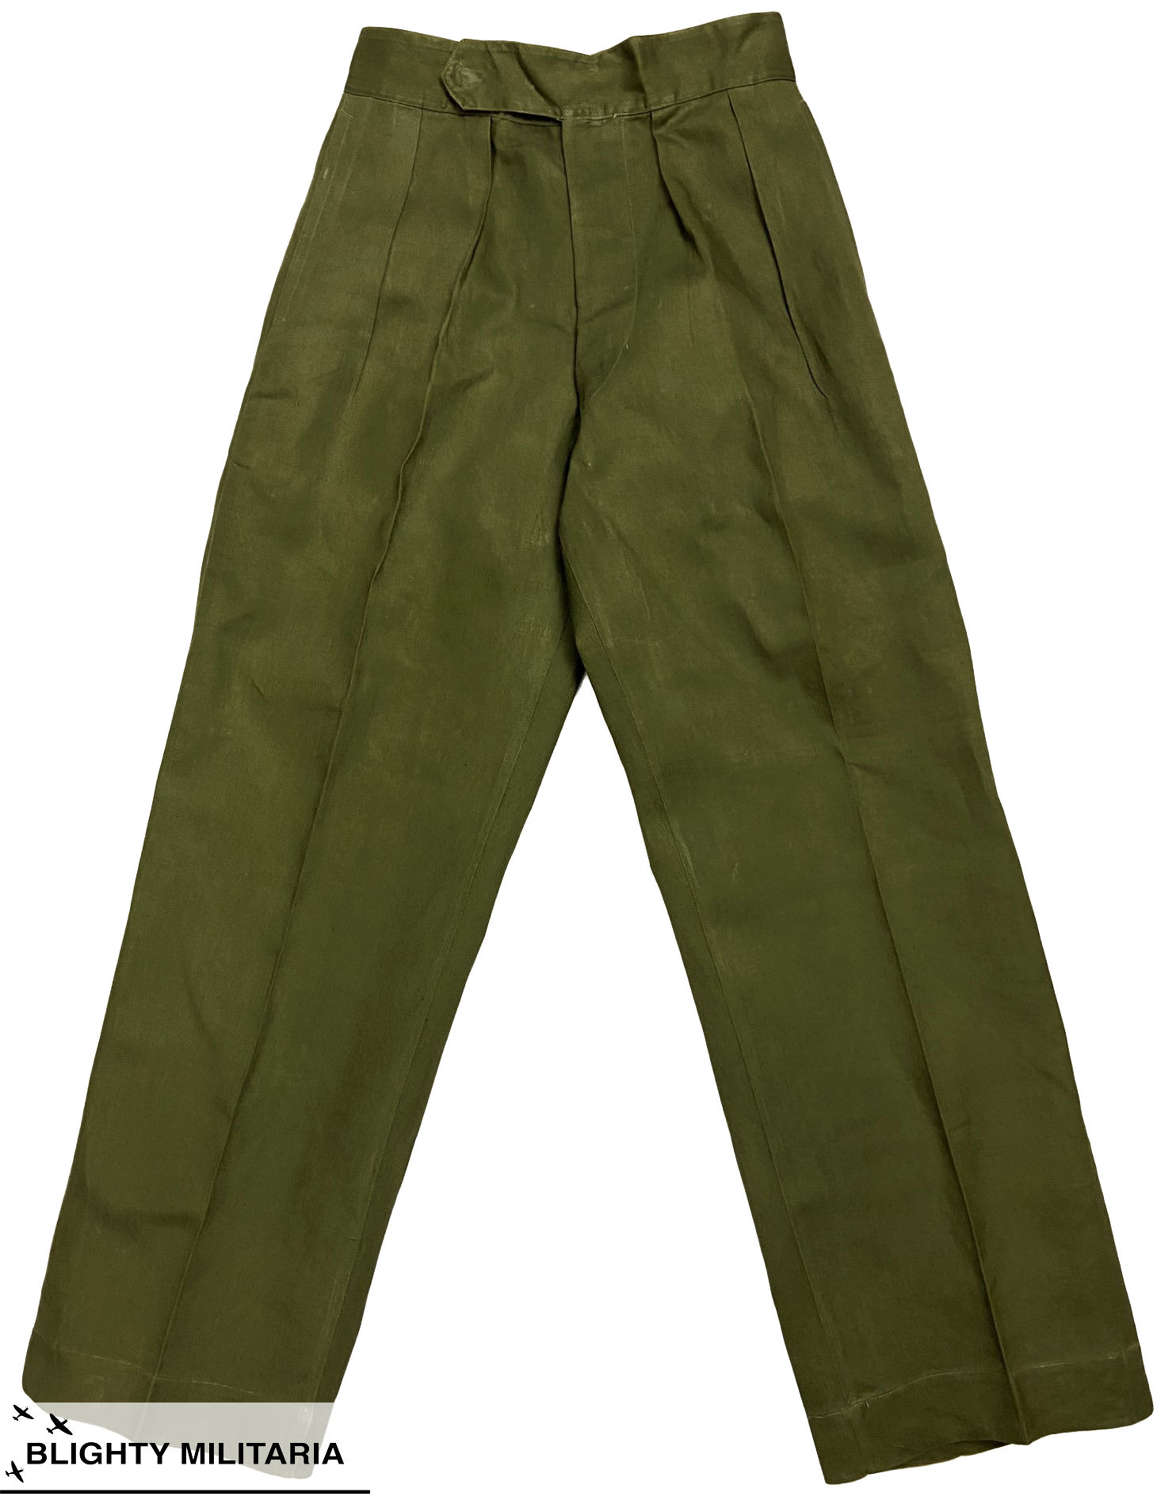 Original 1950s British Army Theatre Made Jungle Green Trousers - 28